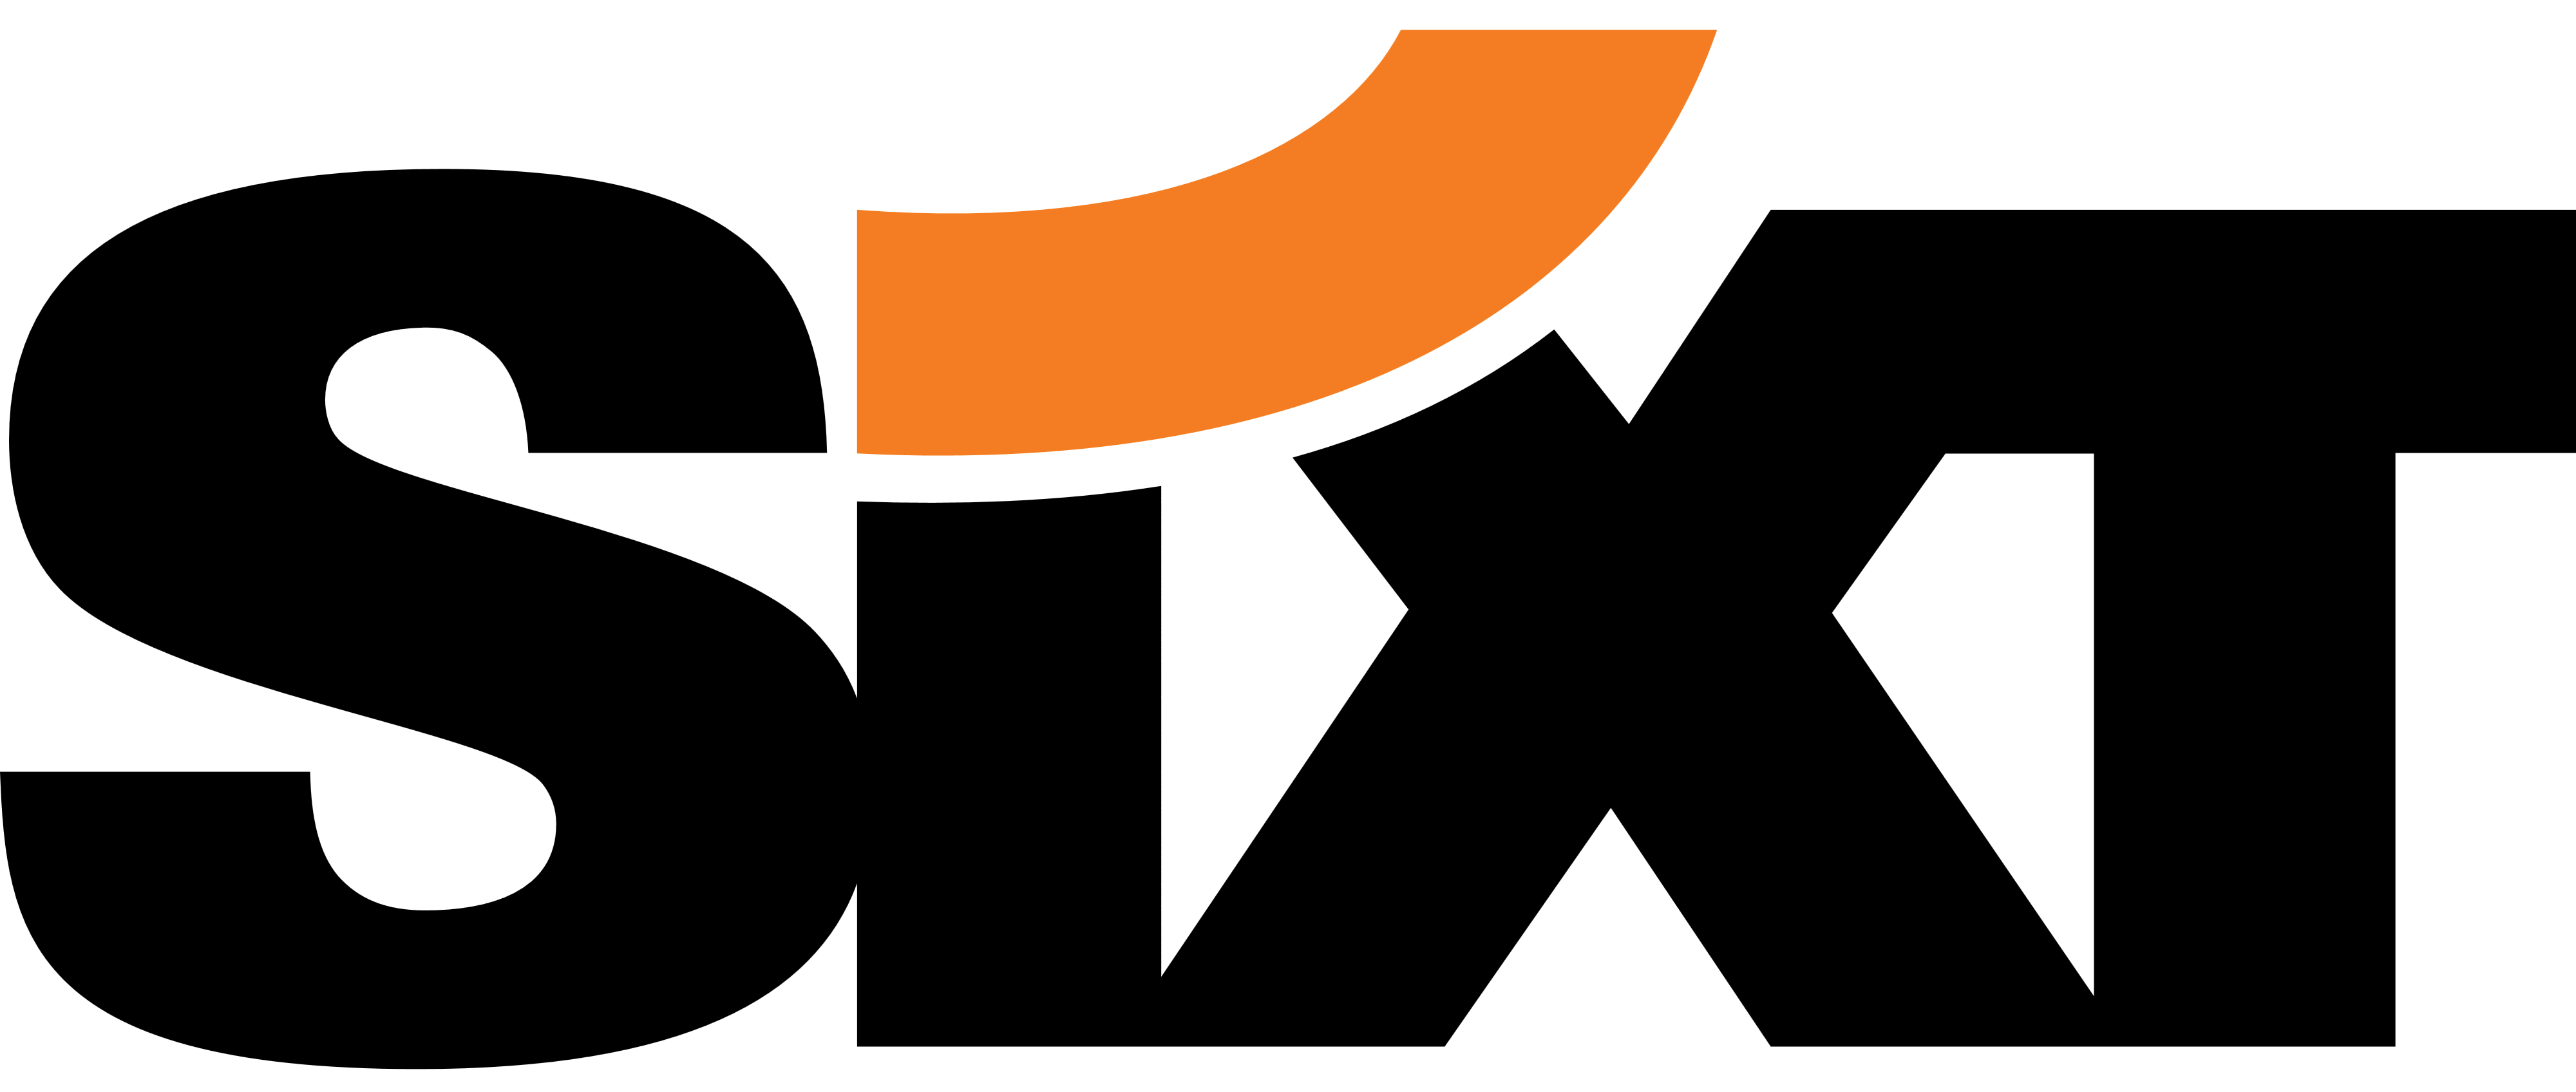 Sixt logo, logotype